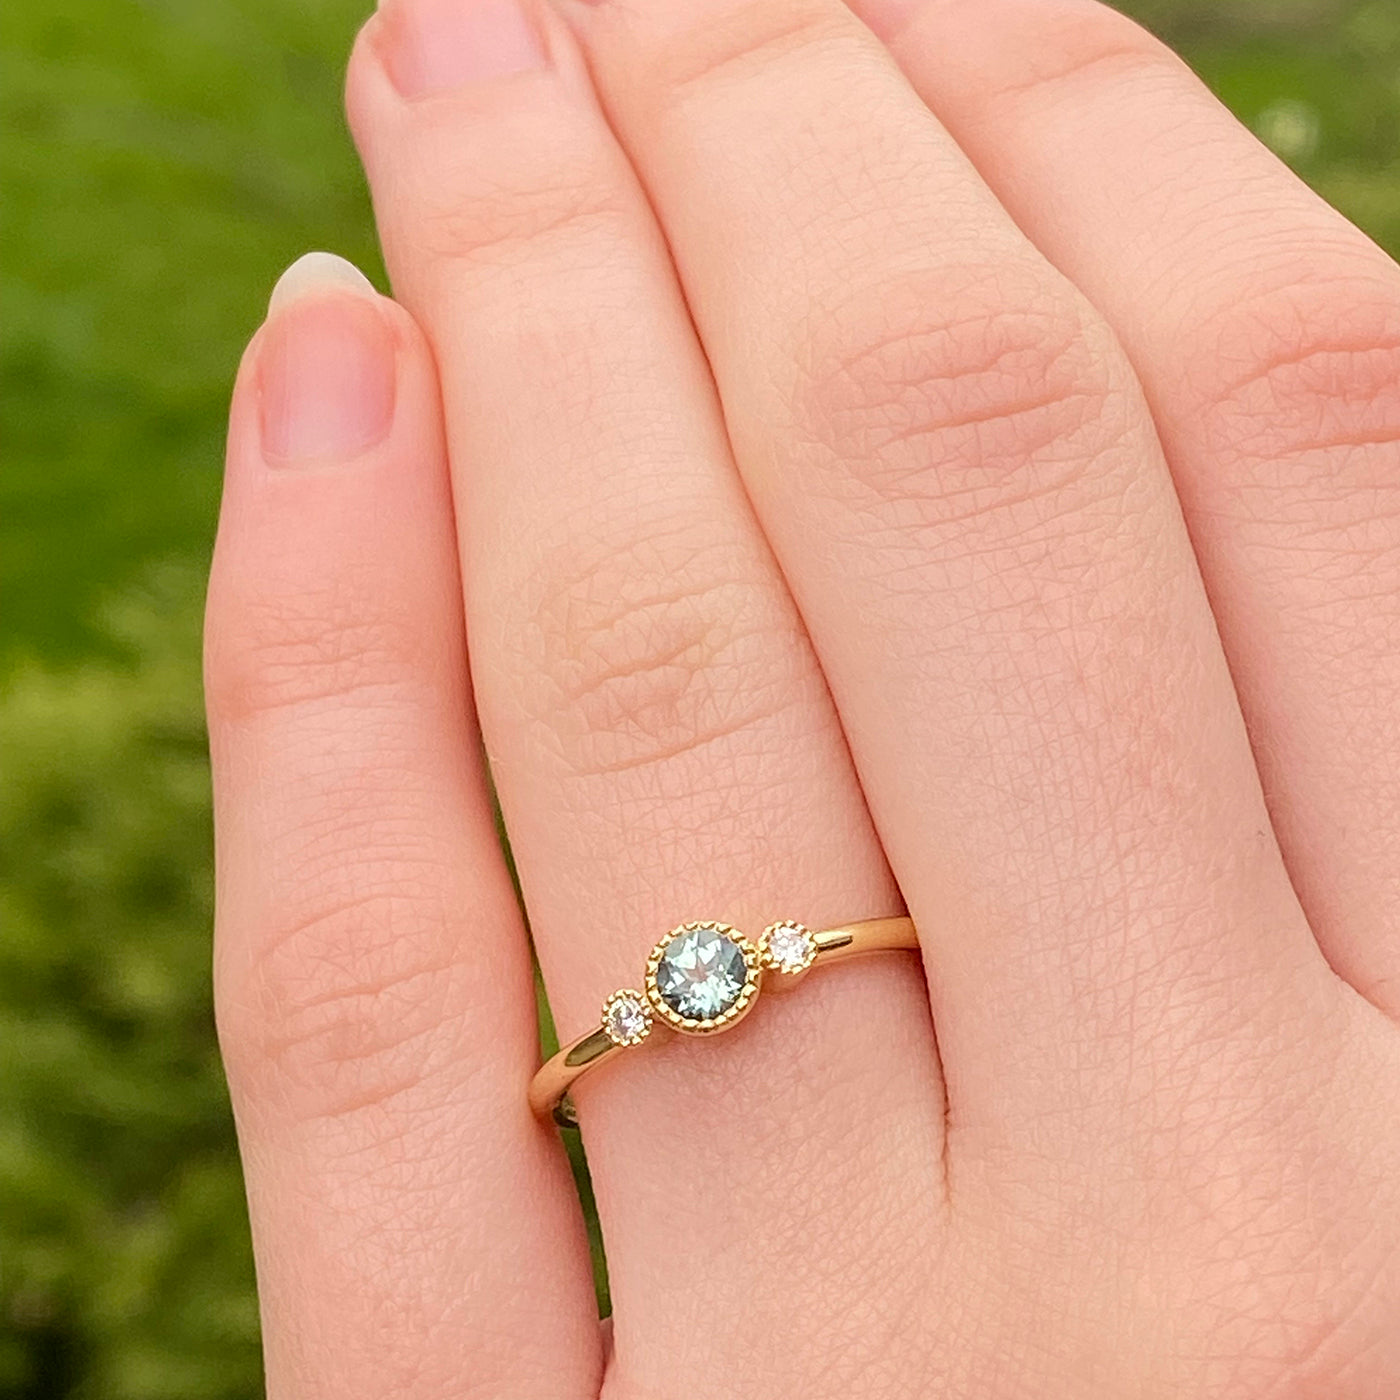 18ct Gold Petite Teal Sapphire & Diamond Trilogy Engagement Ring (Size L, Resize J - L 1/2)